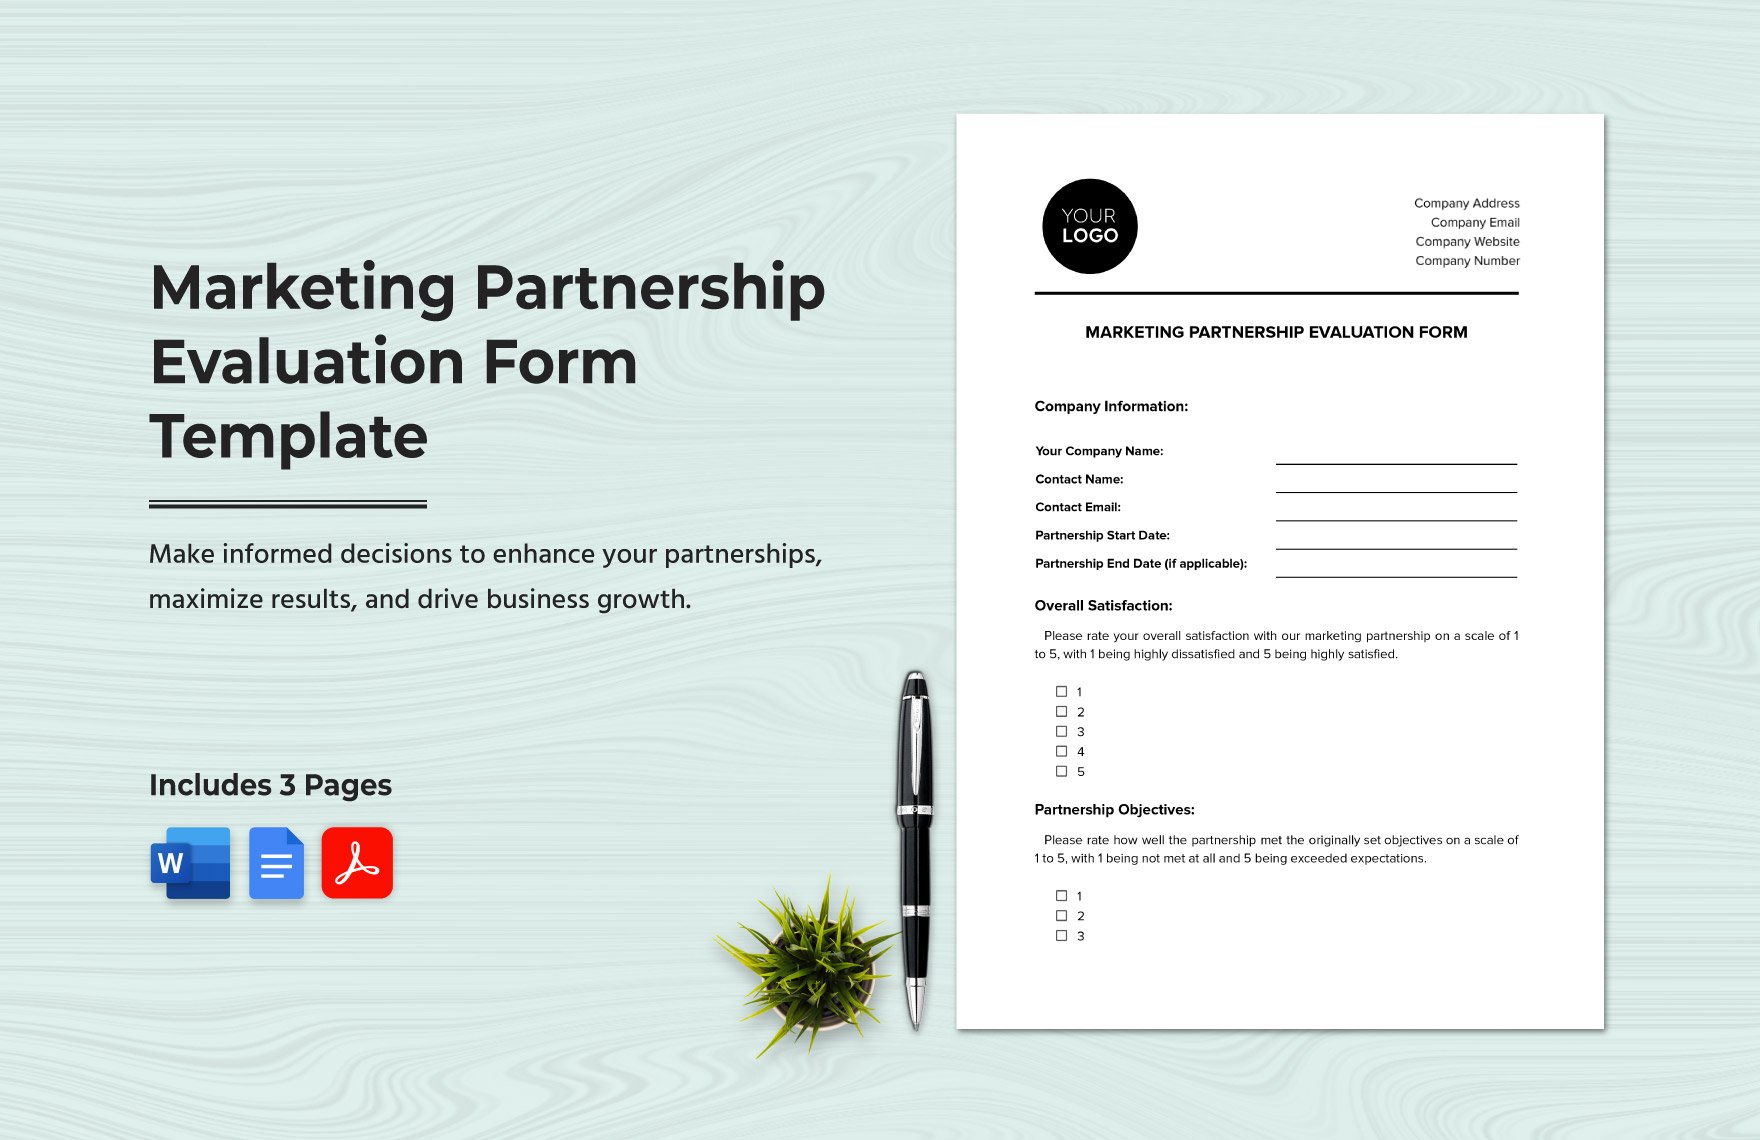 Marketing Partnership Evaluation Form Template in Word, Google Docs, PDF